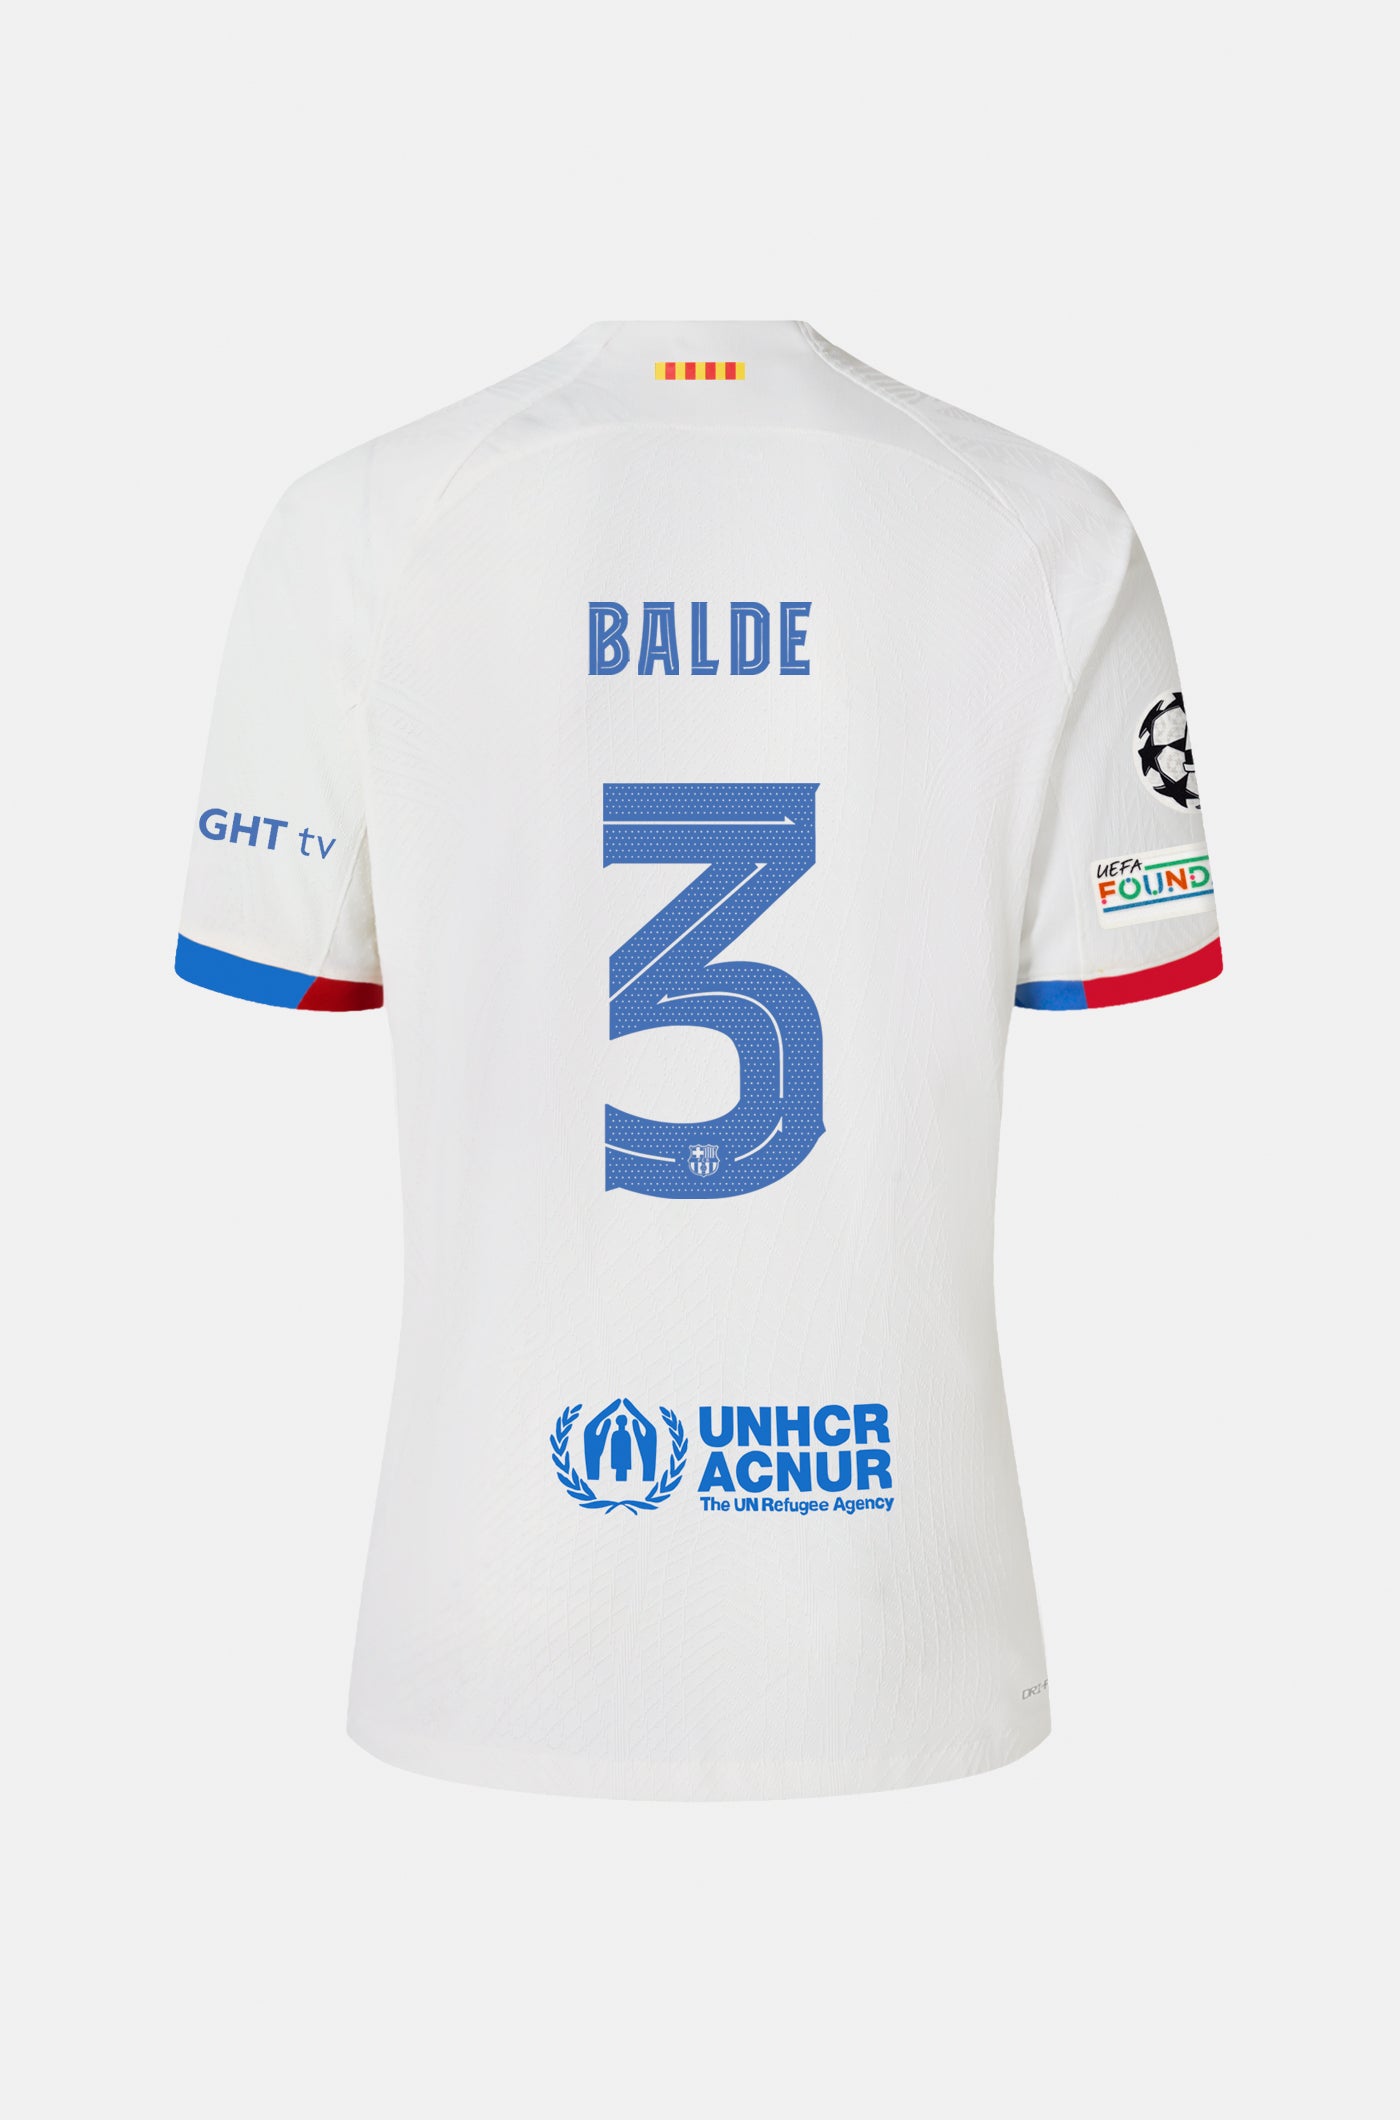 UCL FC Barcelona away shirt 23/24 Player’s Edition - BALDE